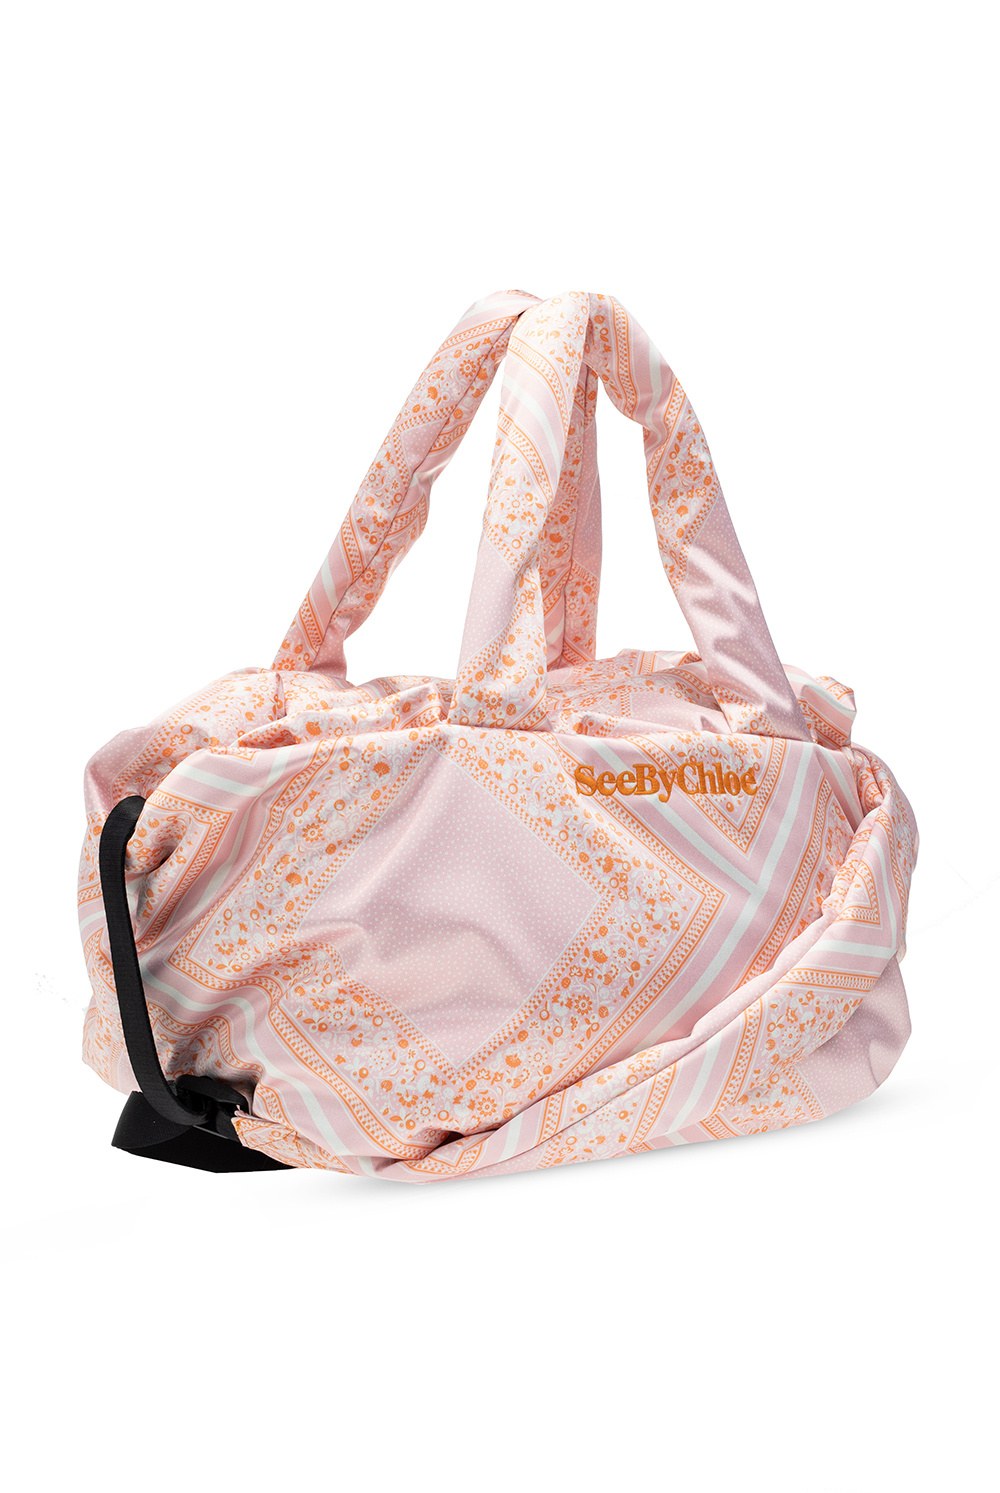 YBB Kelly Pochette Bag Pillow – Your Beloved Bag